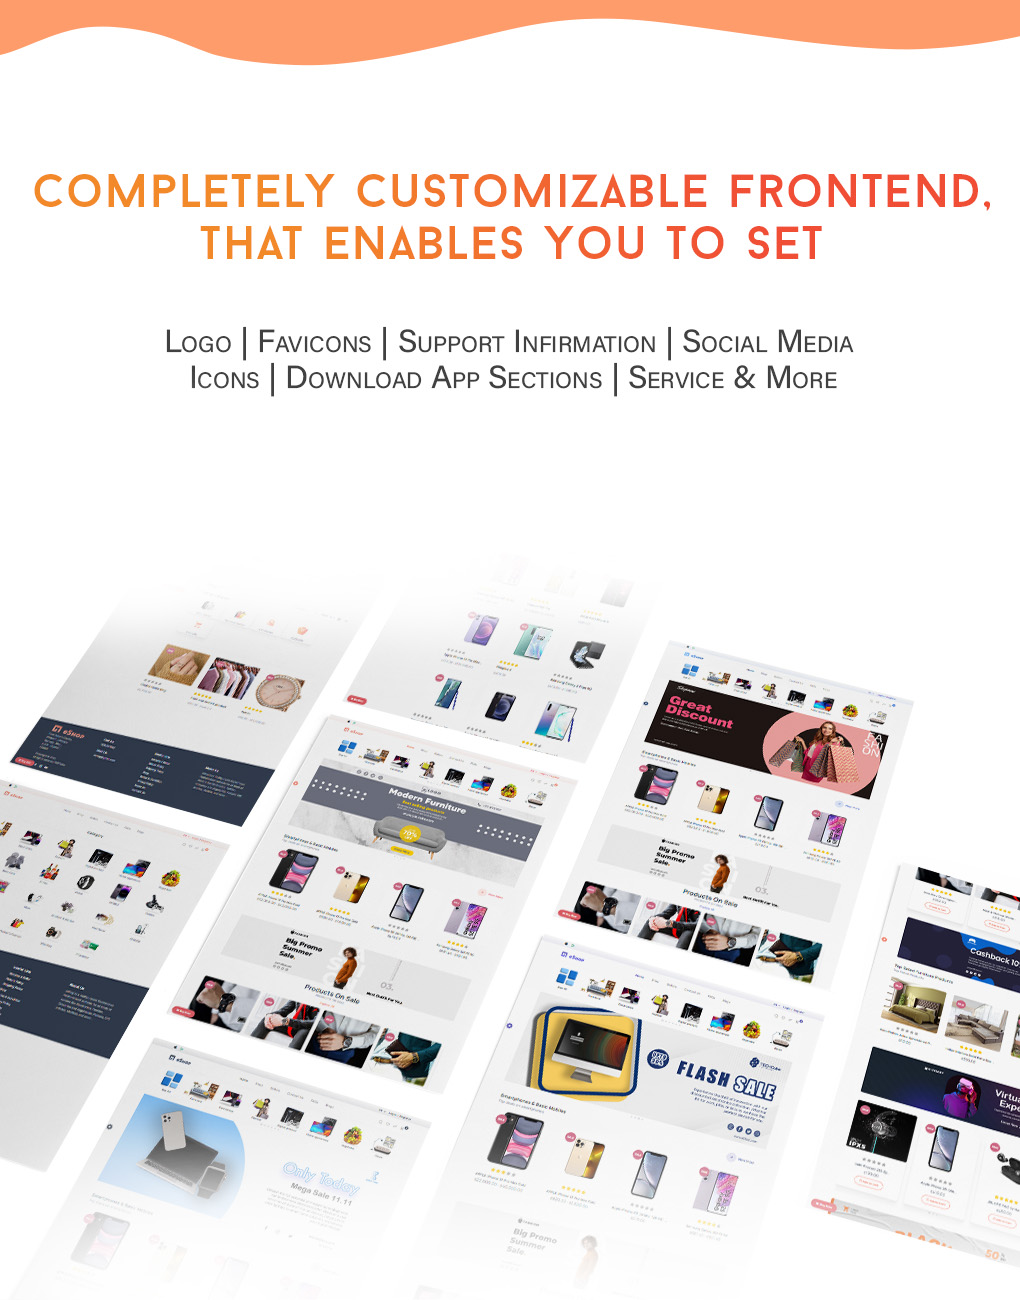 Completely Customisable frontend - eShop website Multi vendor ecommerce marketplace / CMS